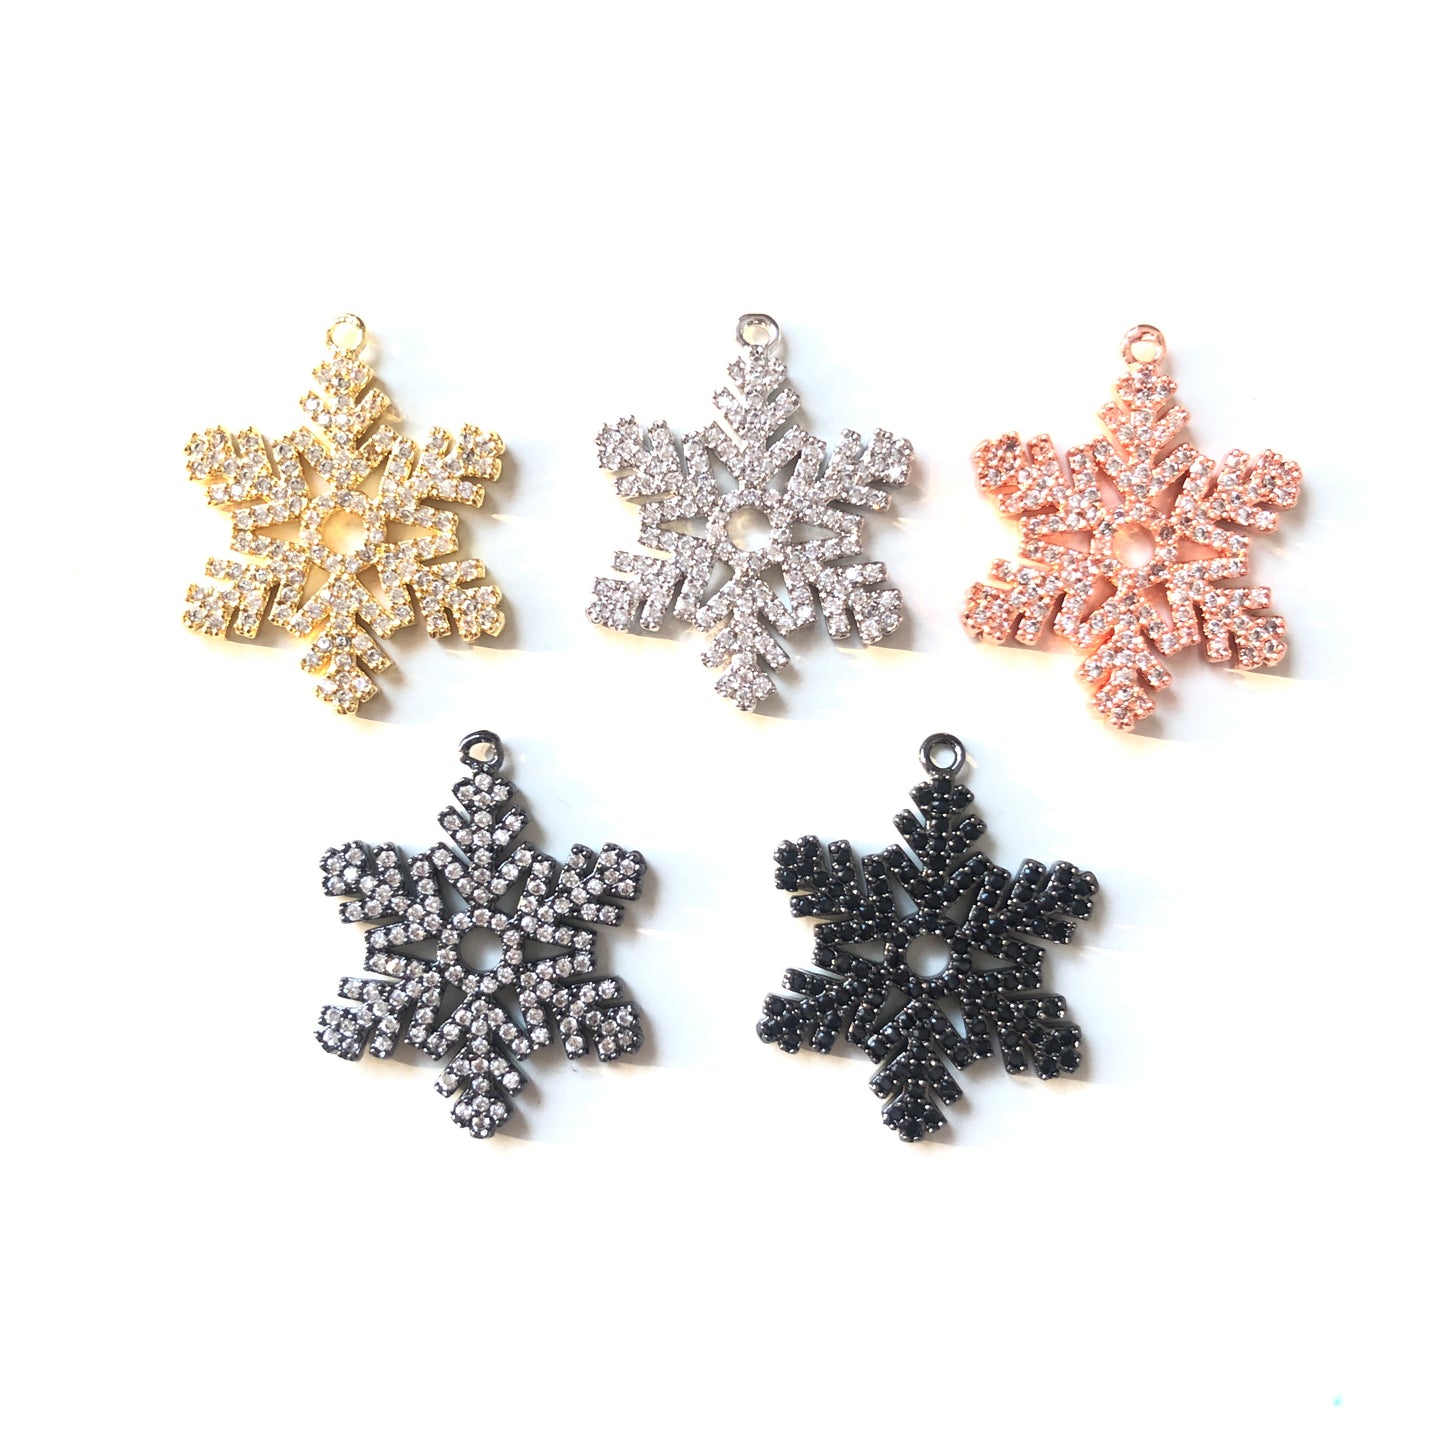 10pcs/lot 22*20mm CZ Paved Snowflakes Charms CZ Paved Charms Christmas On Sale Charms Beads Beyond